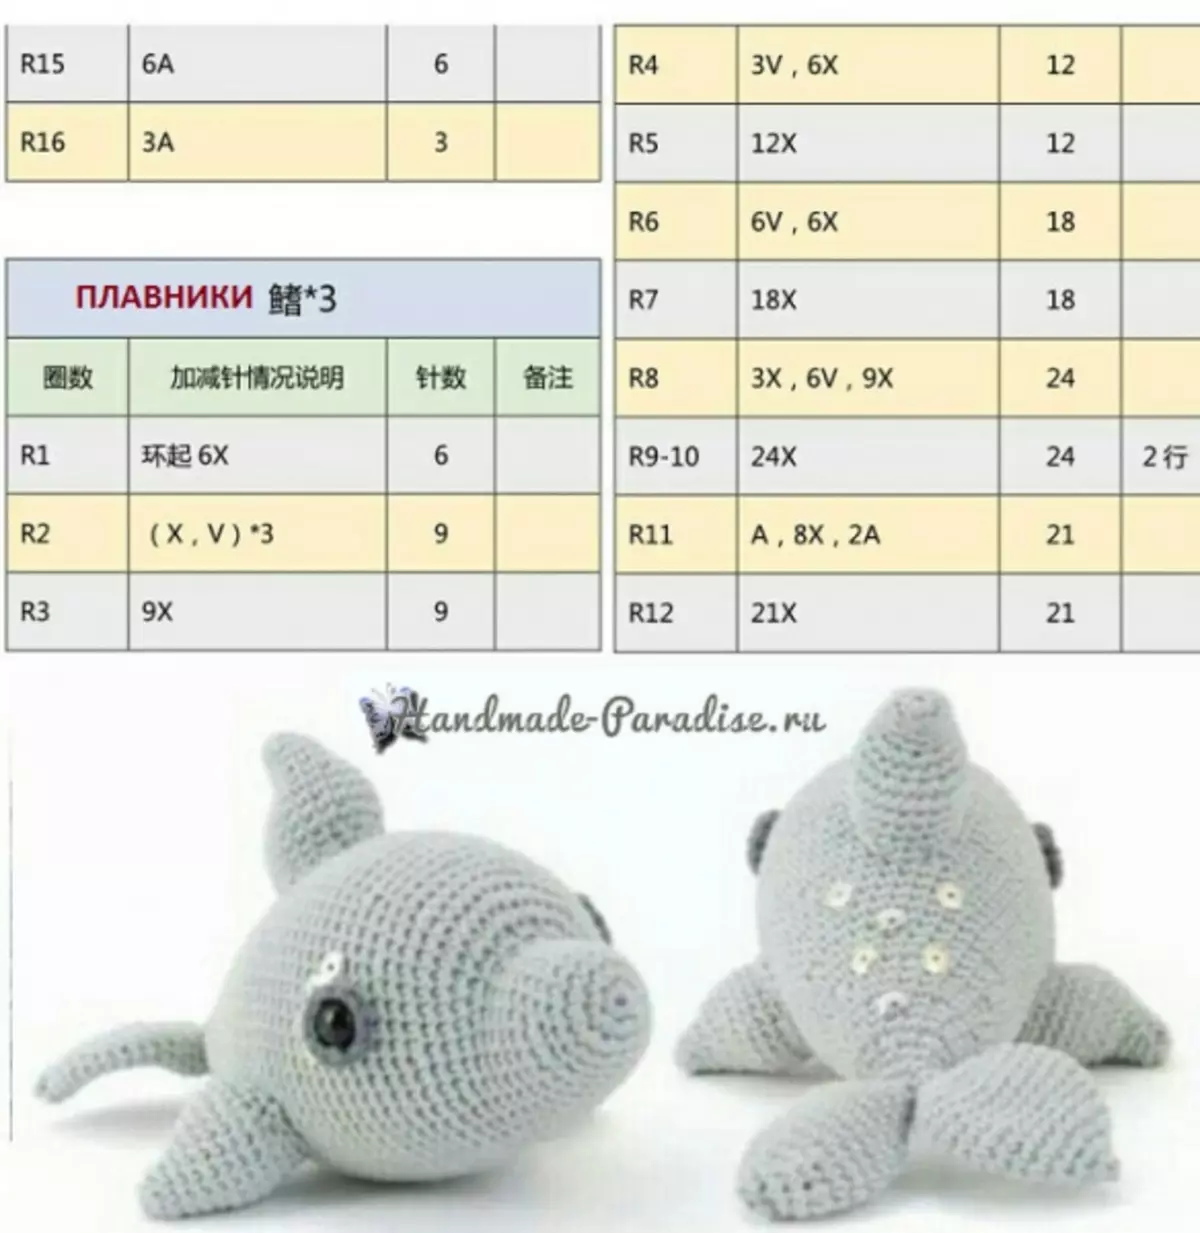 Dolphin Crochet. Katrangan saka Knitting